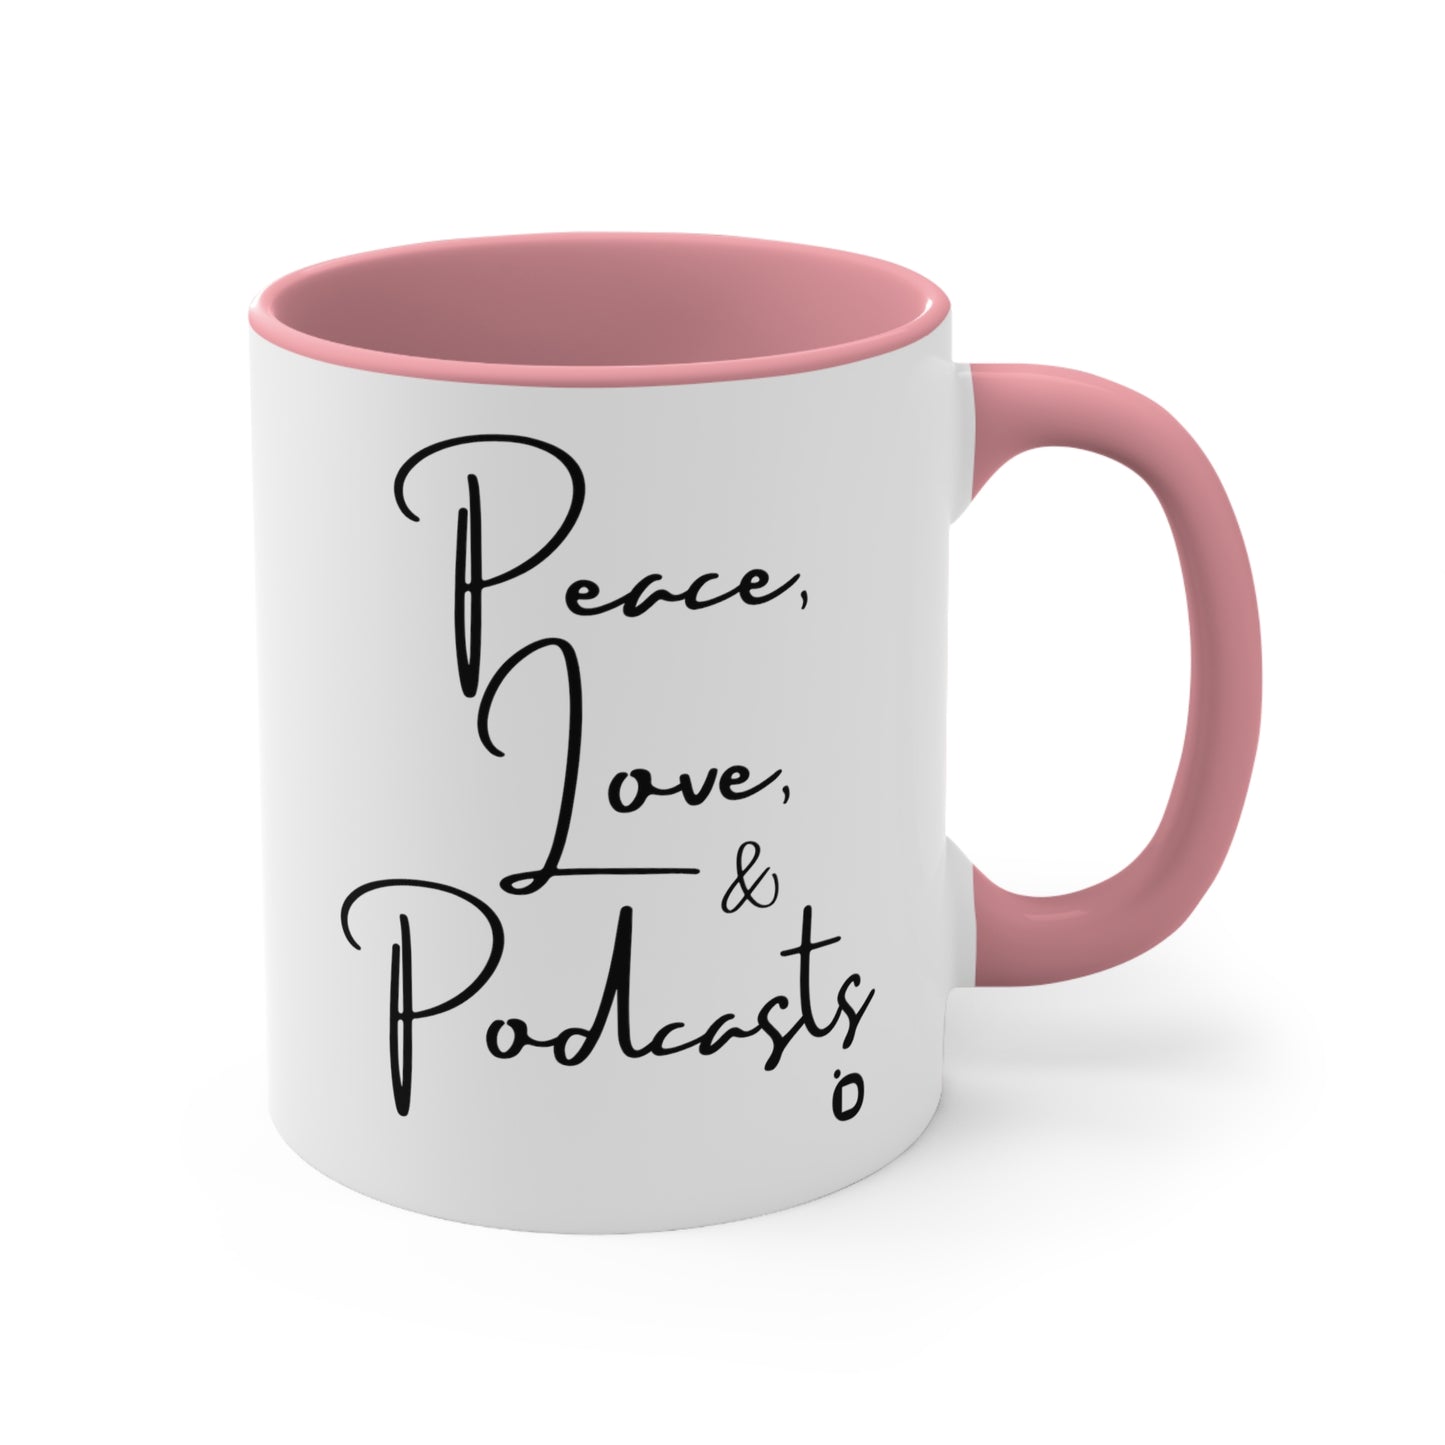 Peace, Love, & Podcasts Coffee Mug, 11oz - Black Print